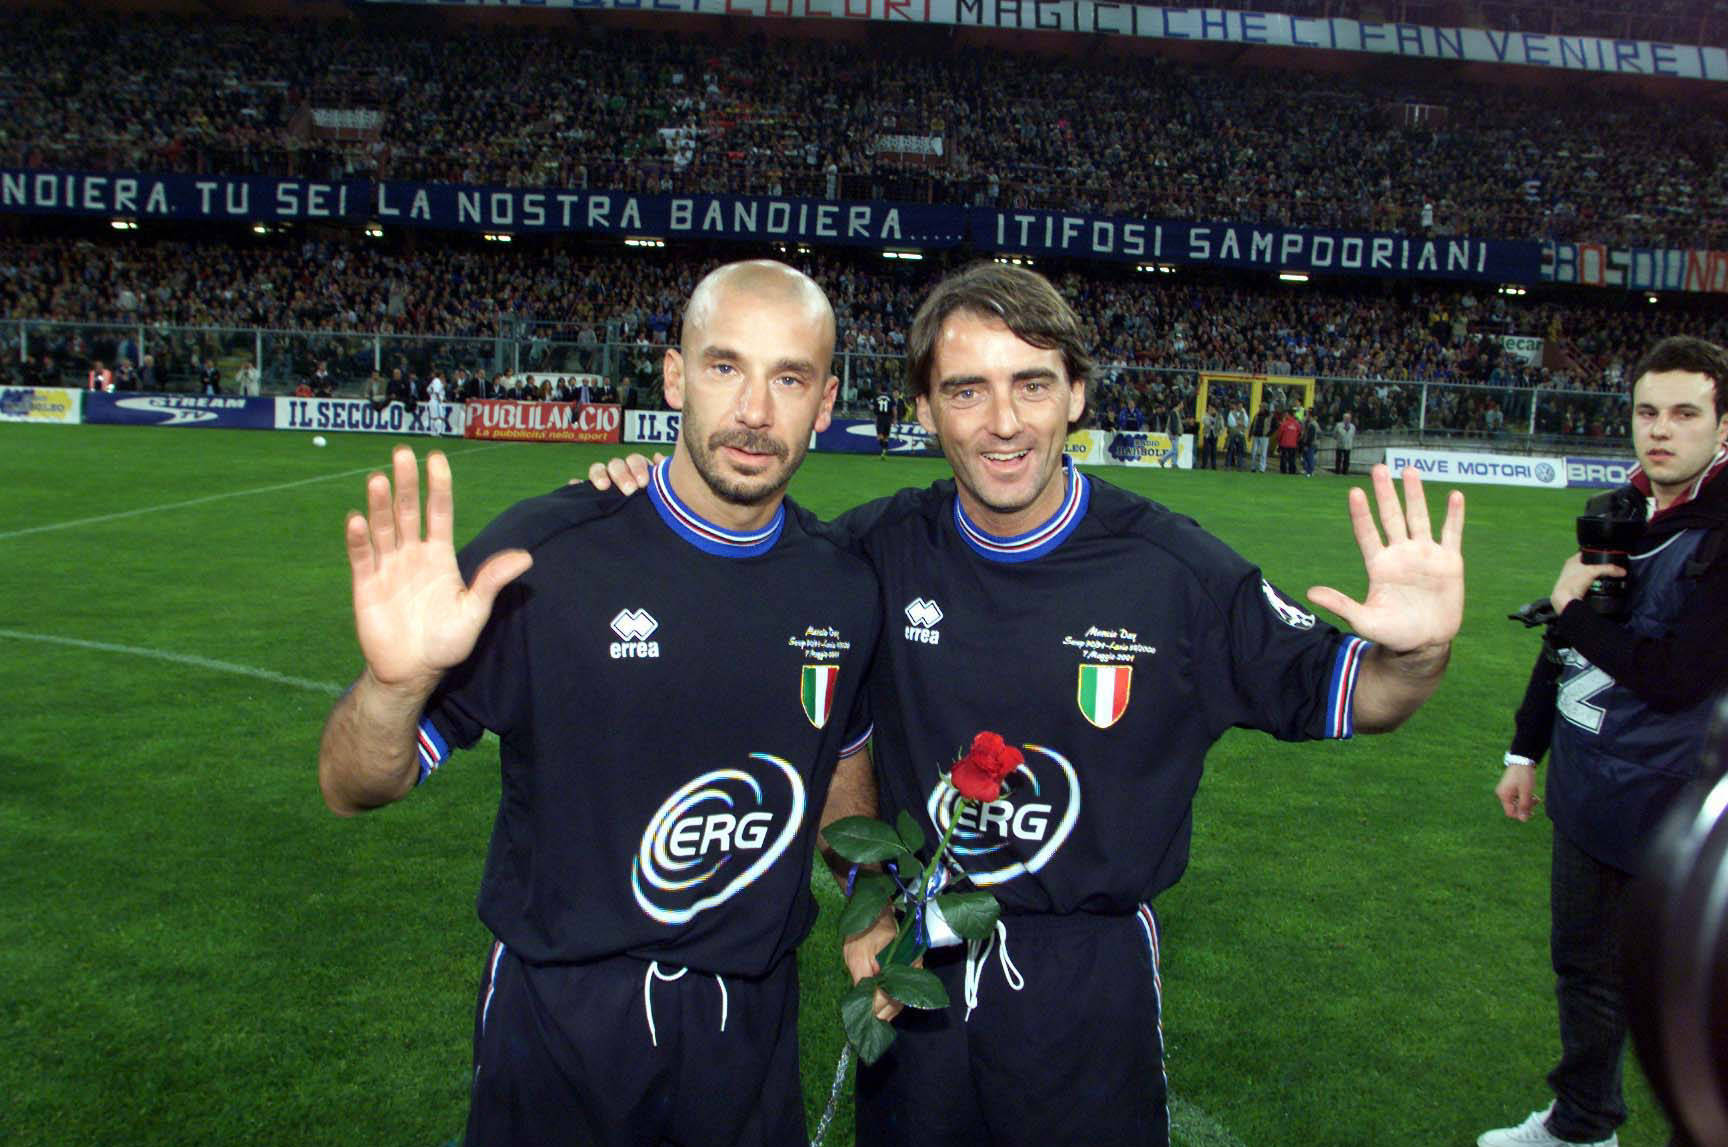 Gianluca Vialli und Roberto Mancini winken in die Kamera